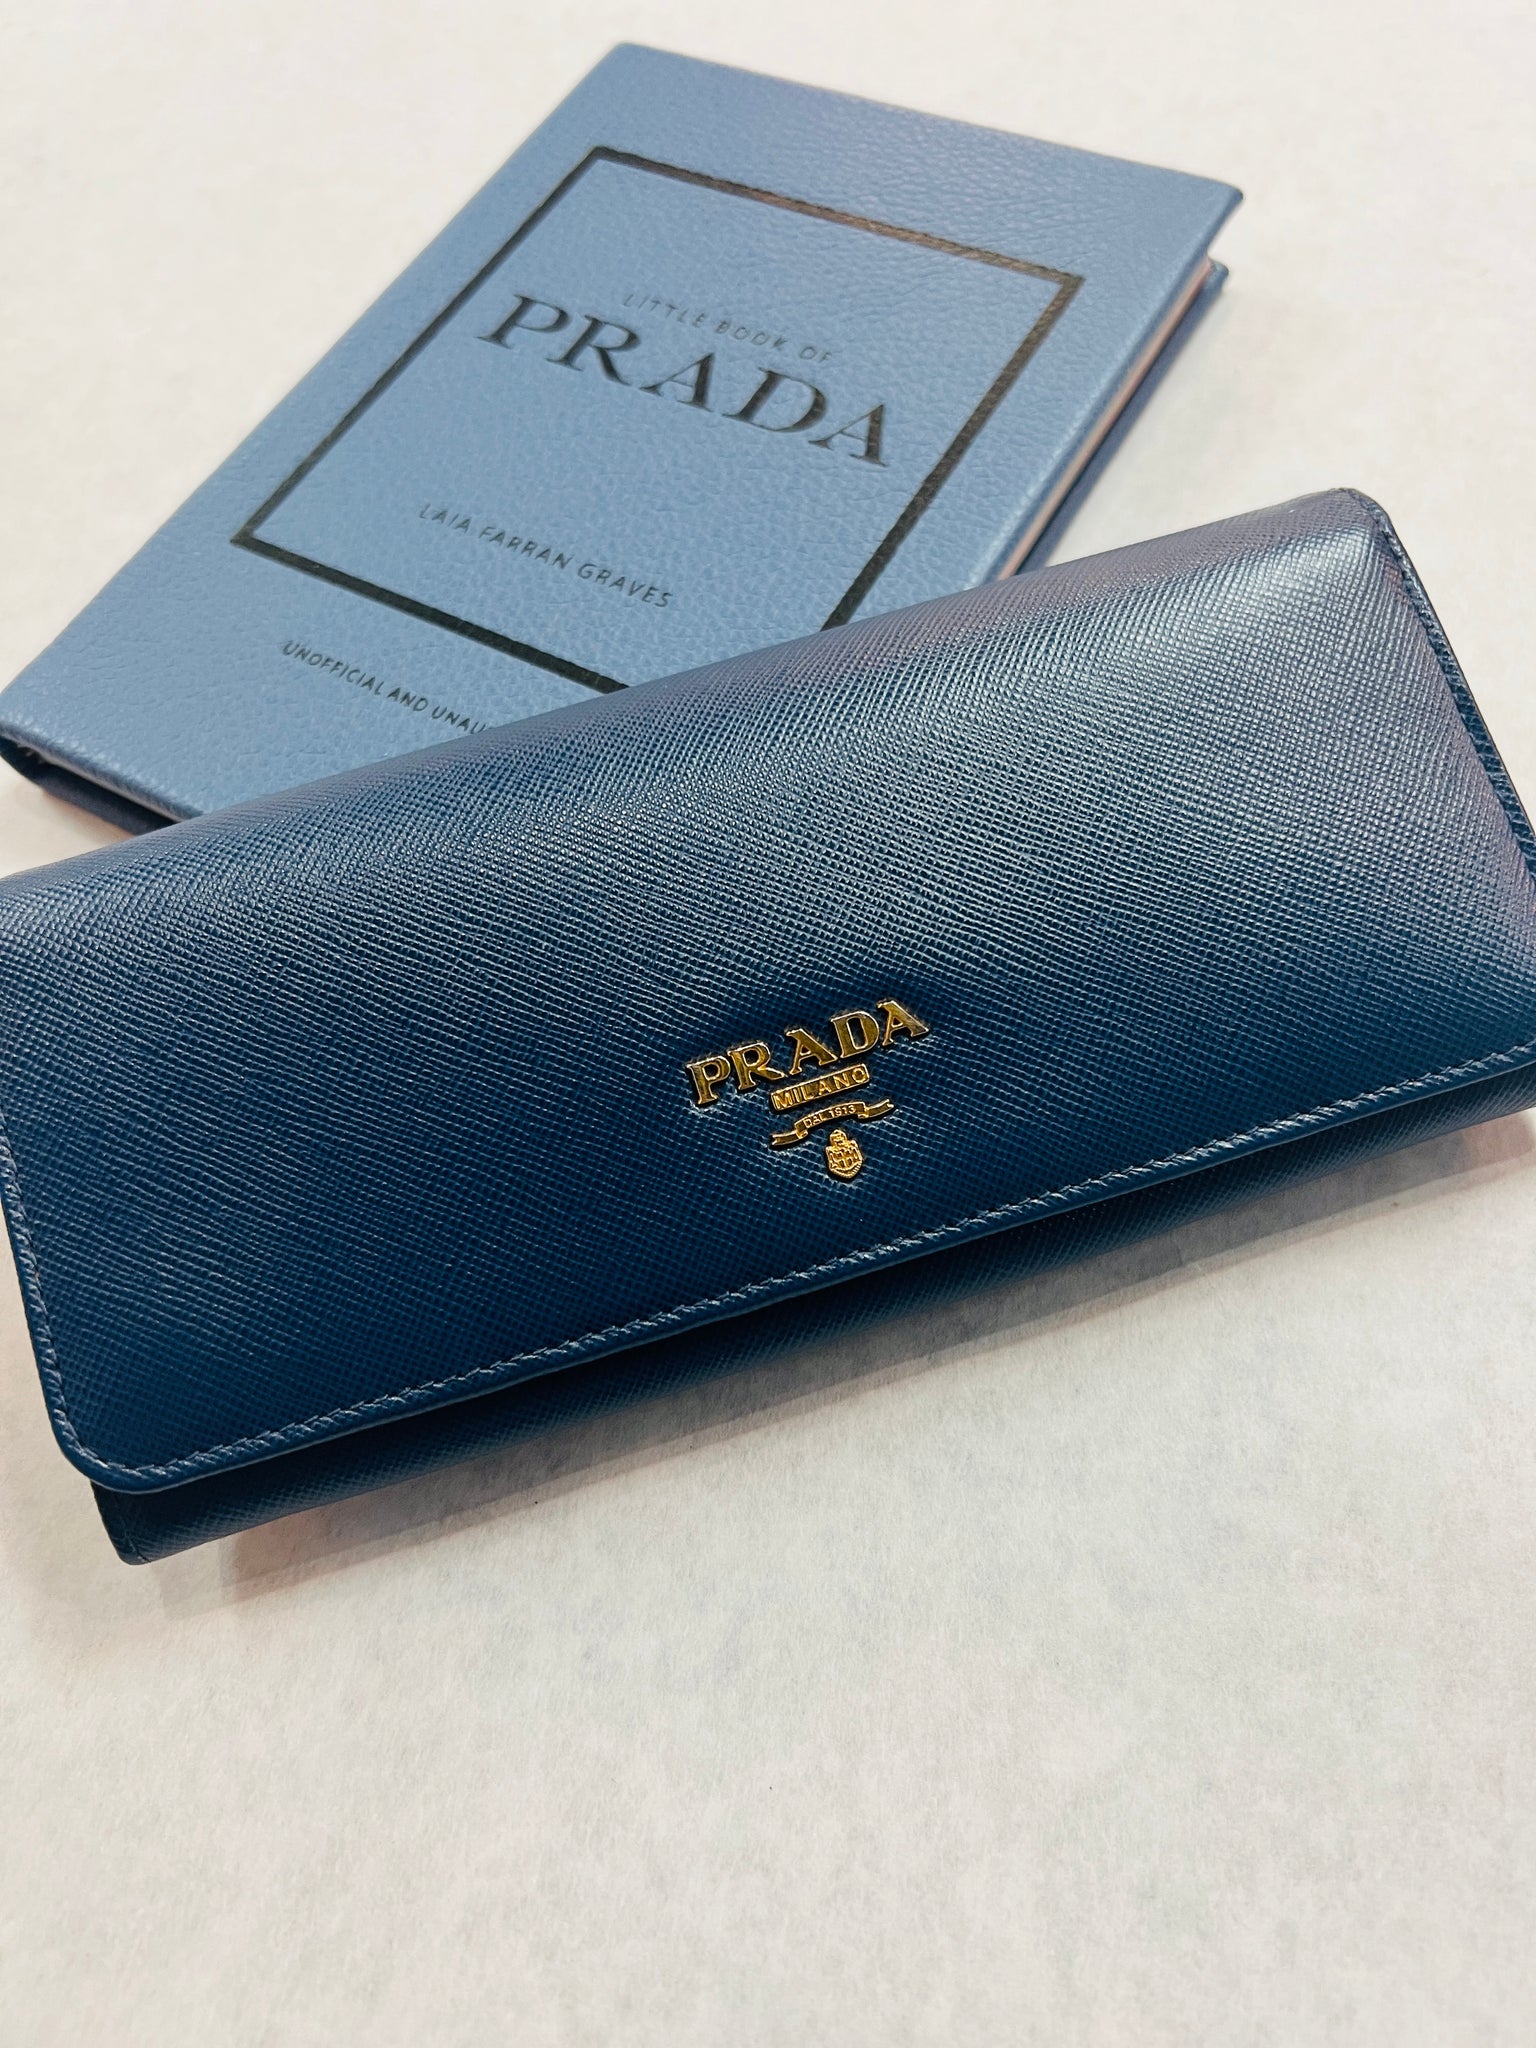 Prada Saffiano Wallet in Leather - Prada Leather Wallet